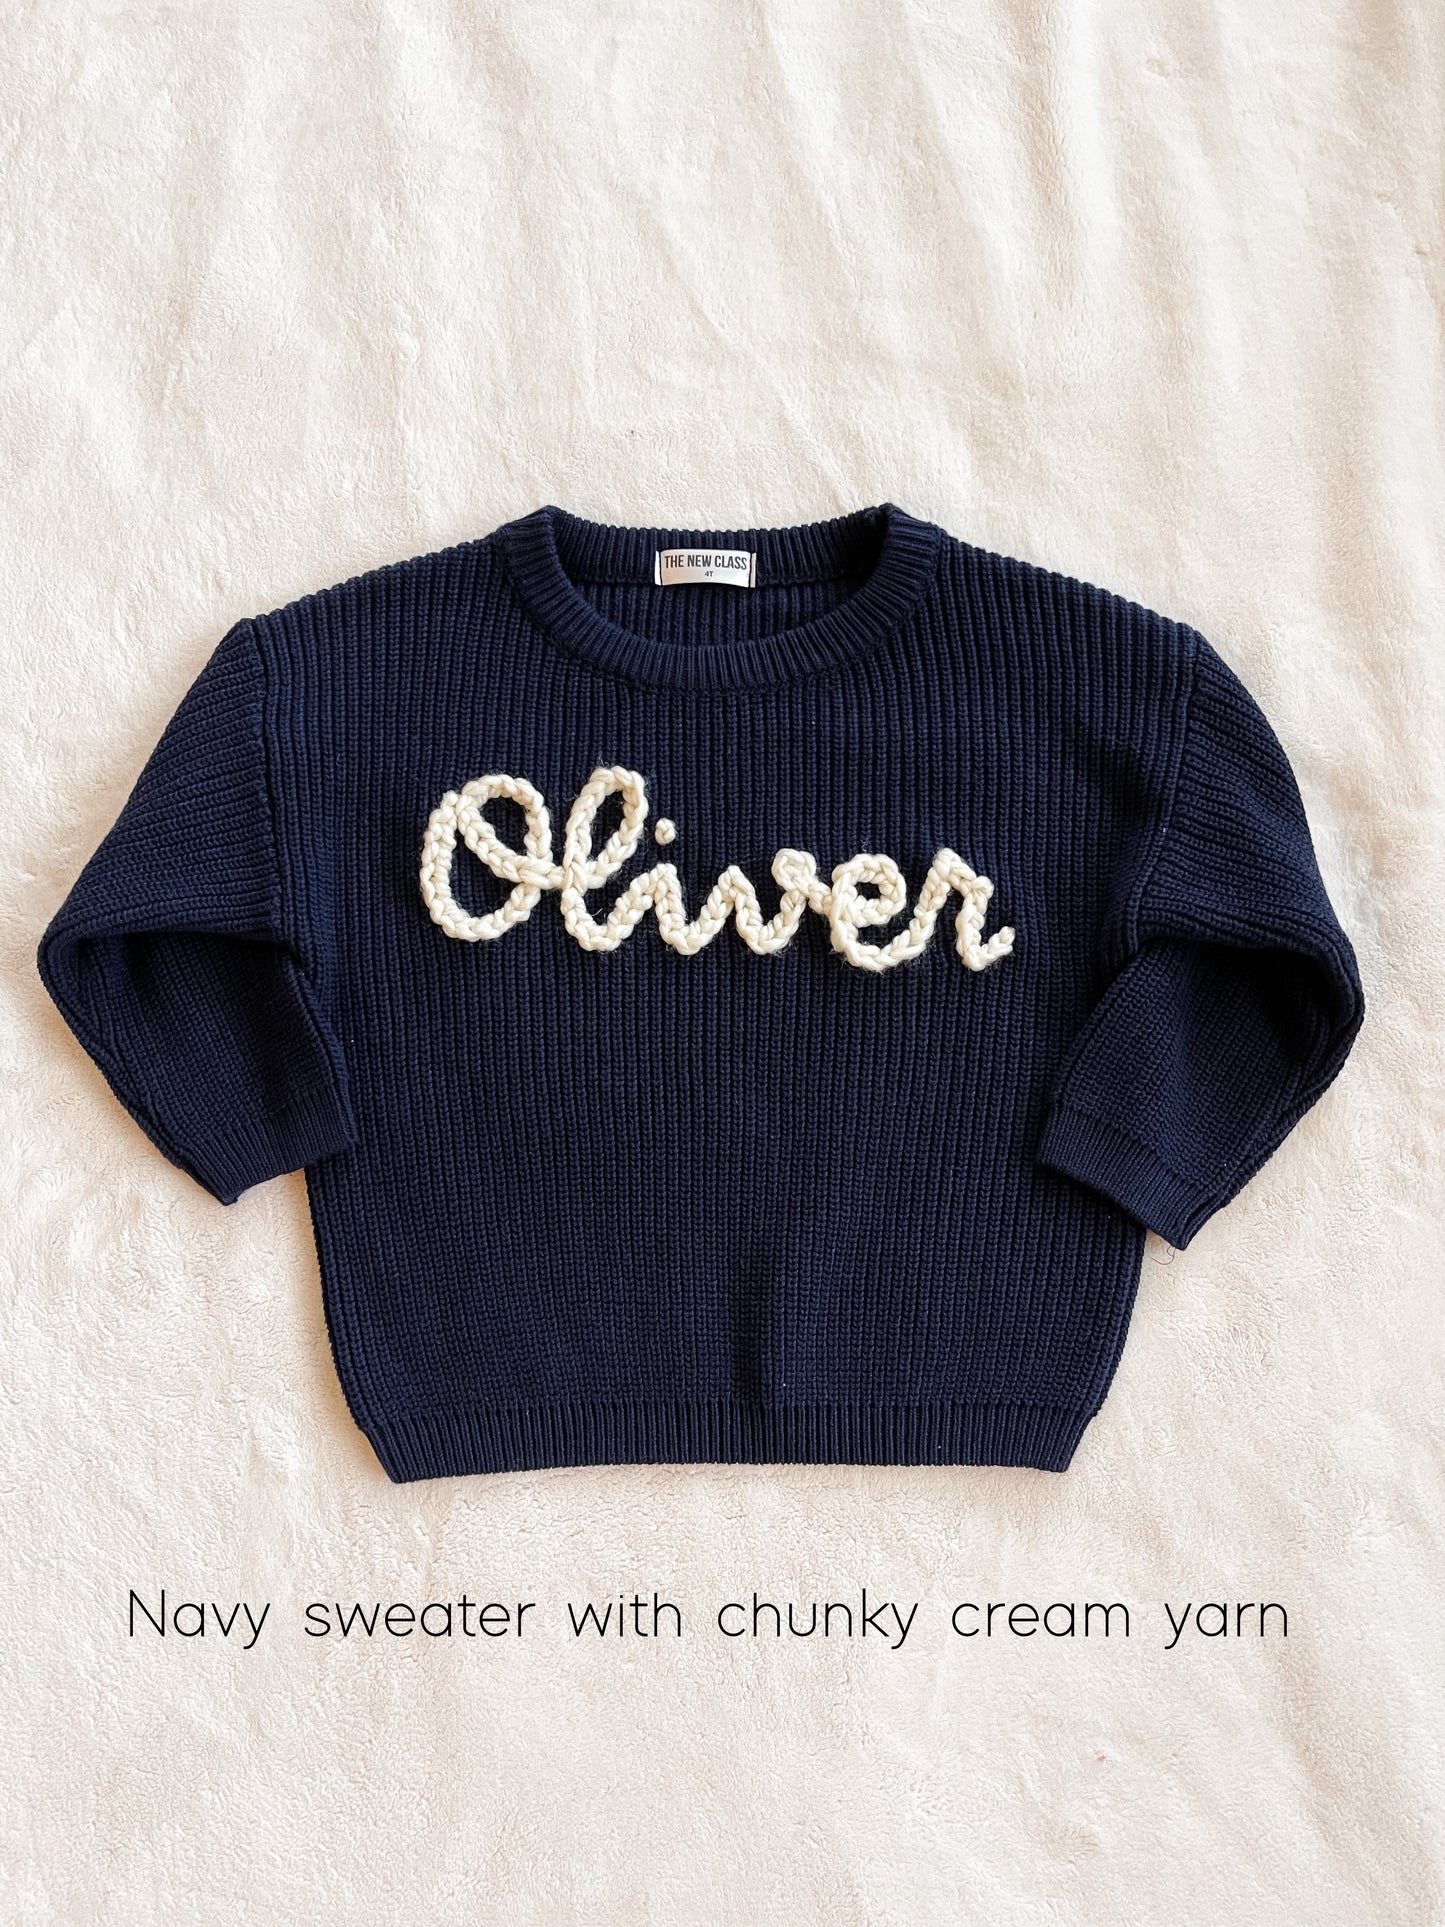 Navy sweater with chunky cream yarn